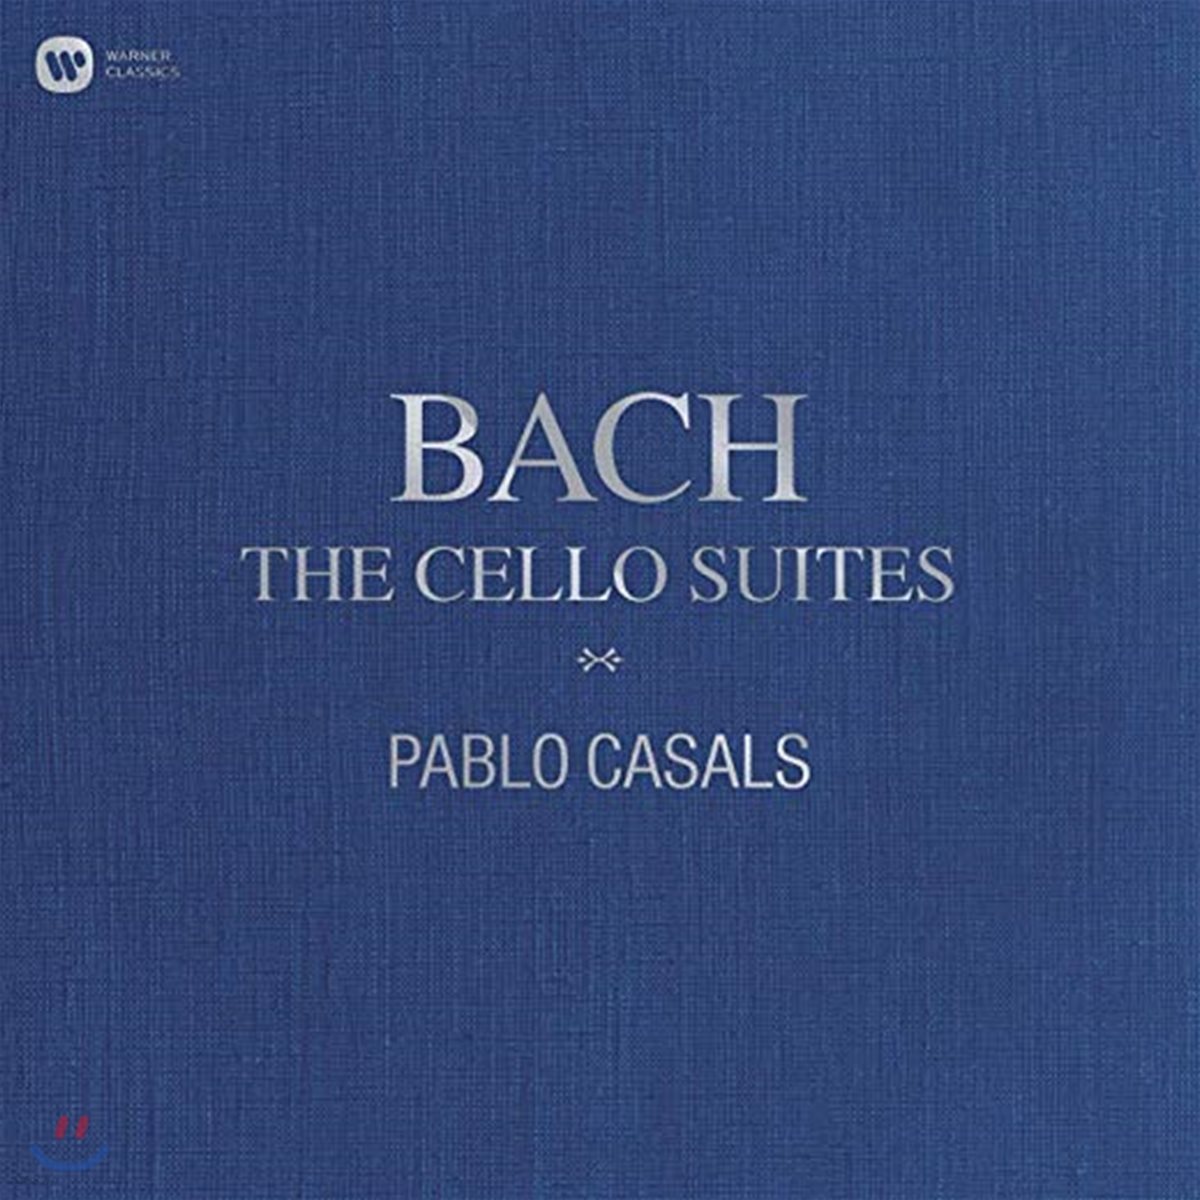 Pablo Casals 바흐: 무반주 첼로 모음곡 전곡집 - 파블로 카잘스 (Bach: The Cello Suites BWV1007-1012) [3LP]